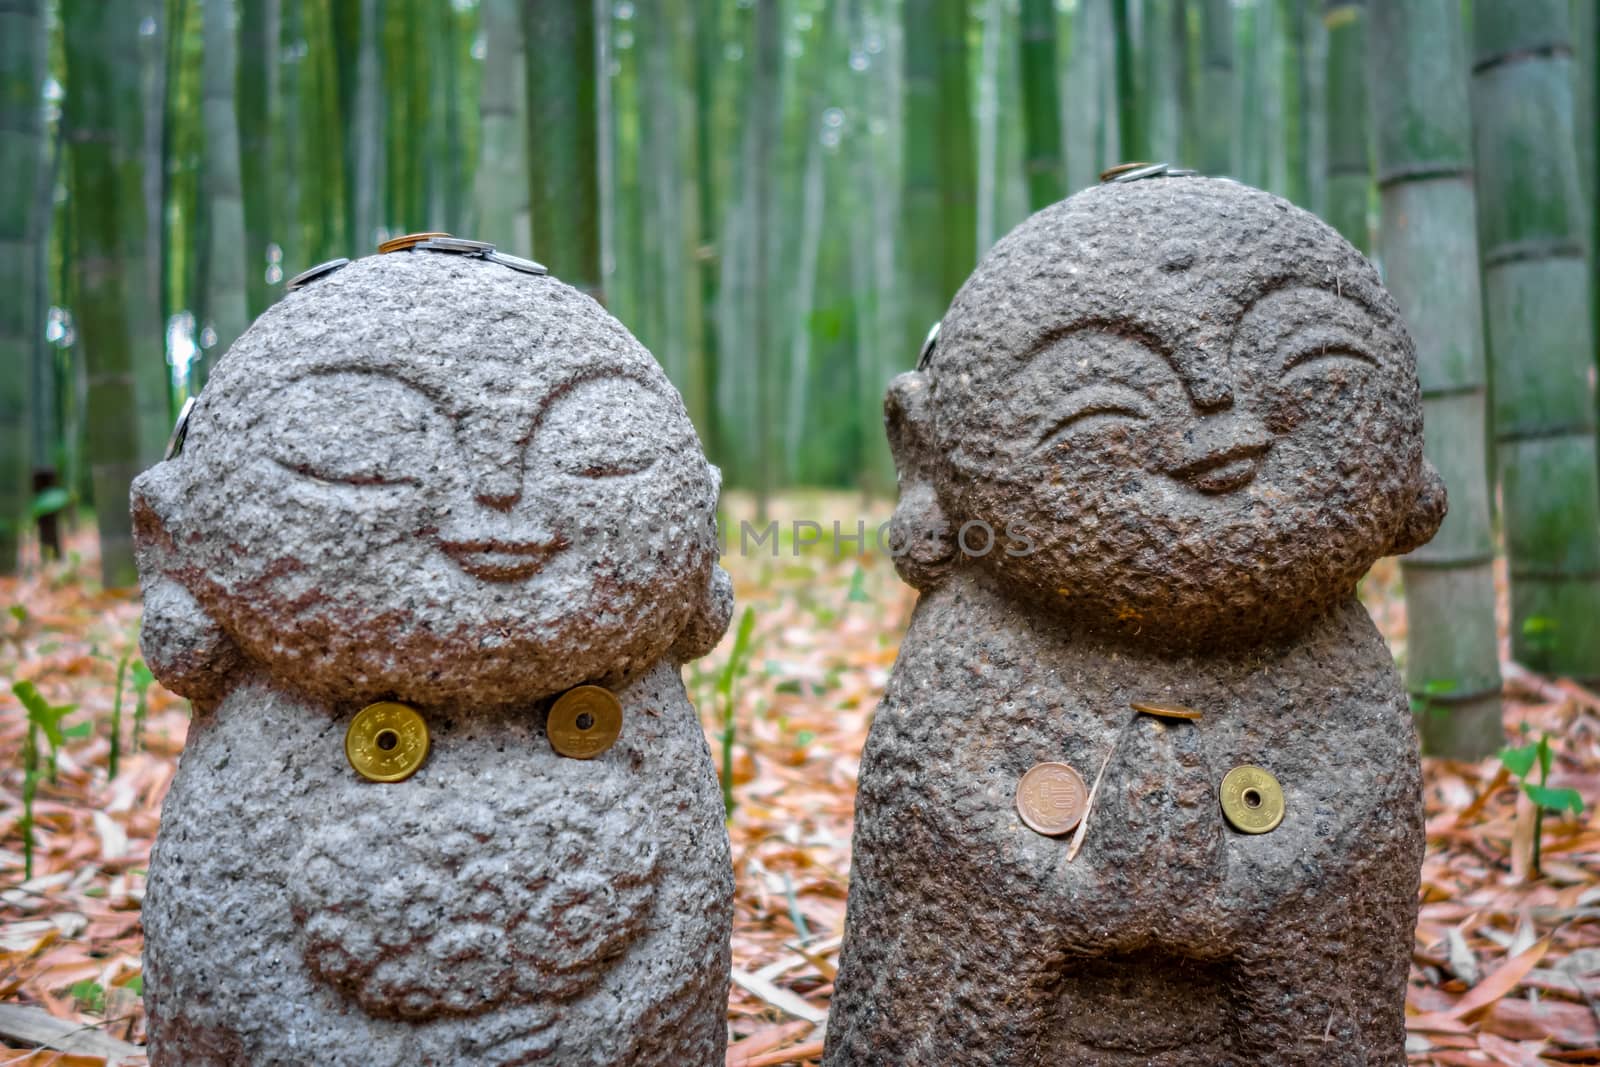 Small Jizo Statues in Arashiyama bamboo forest, Kyoto, Japan